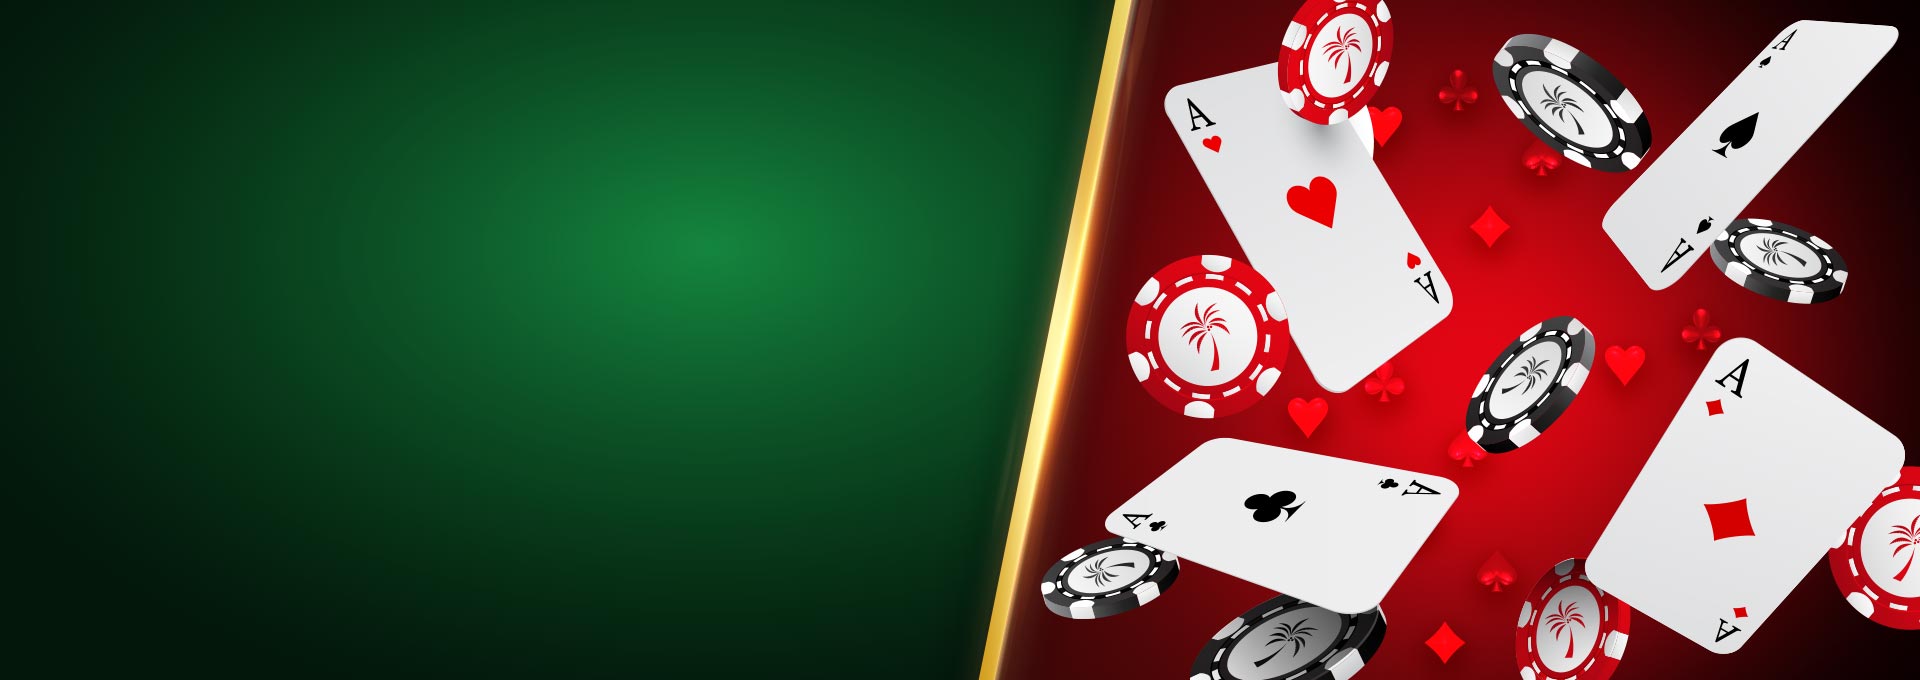 Game of thrones slots casino